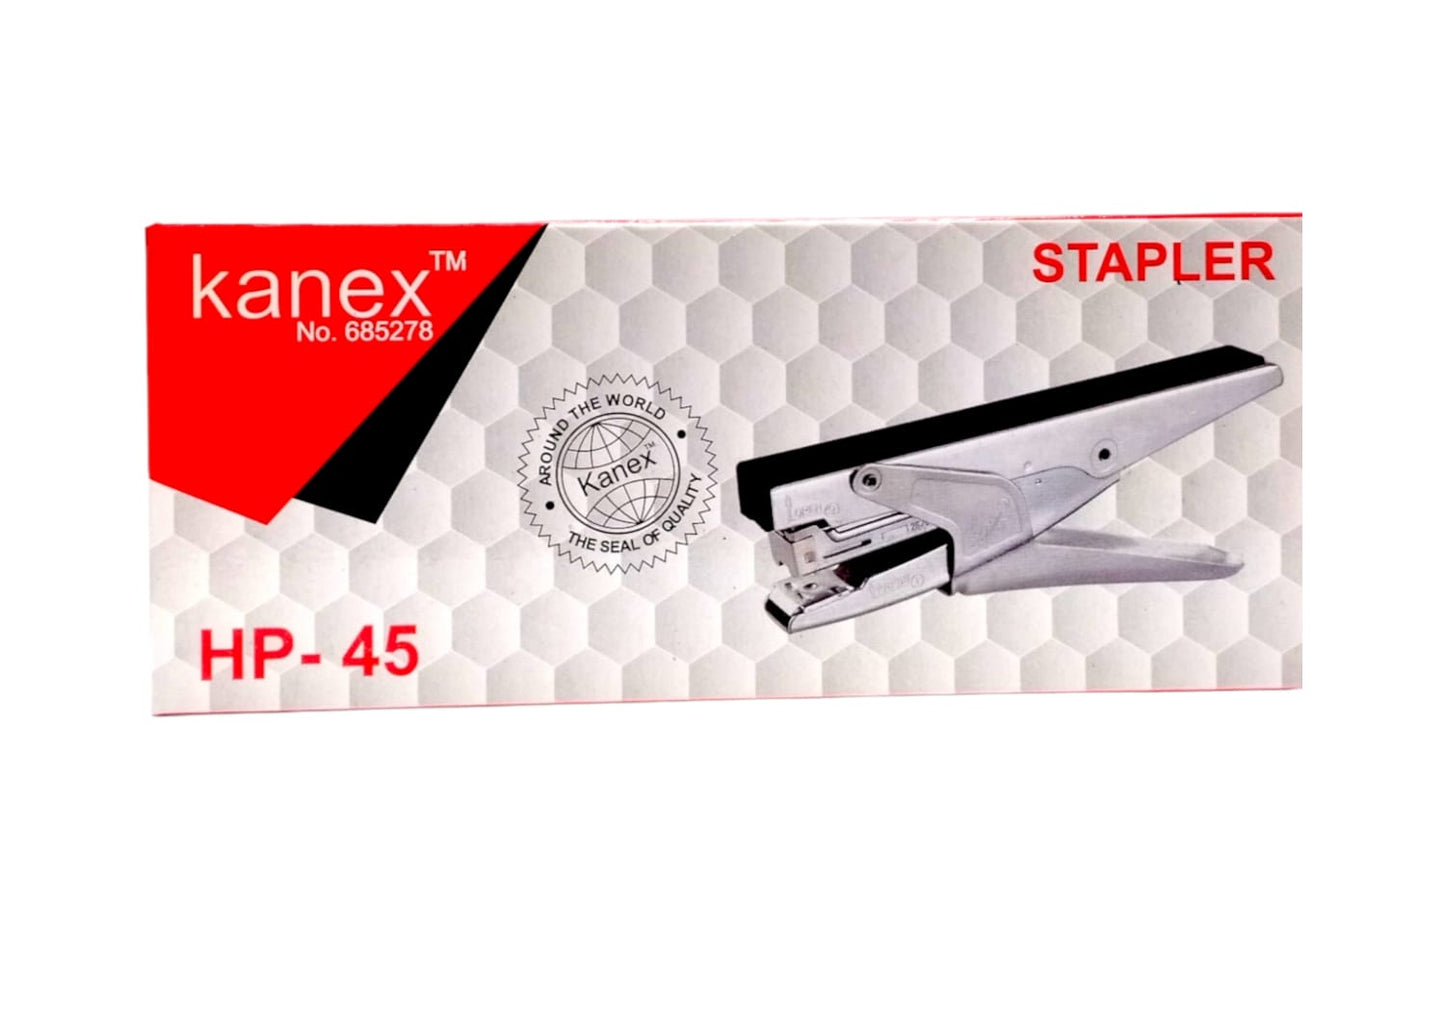 Kanex Stapler HP-45 || دباسة كانيكس